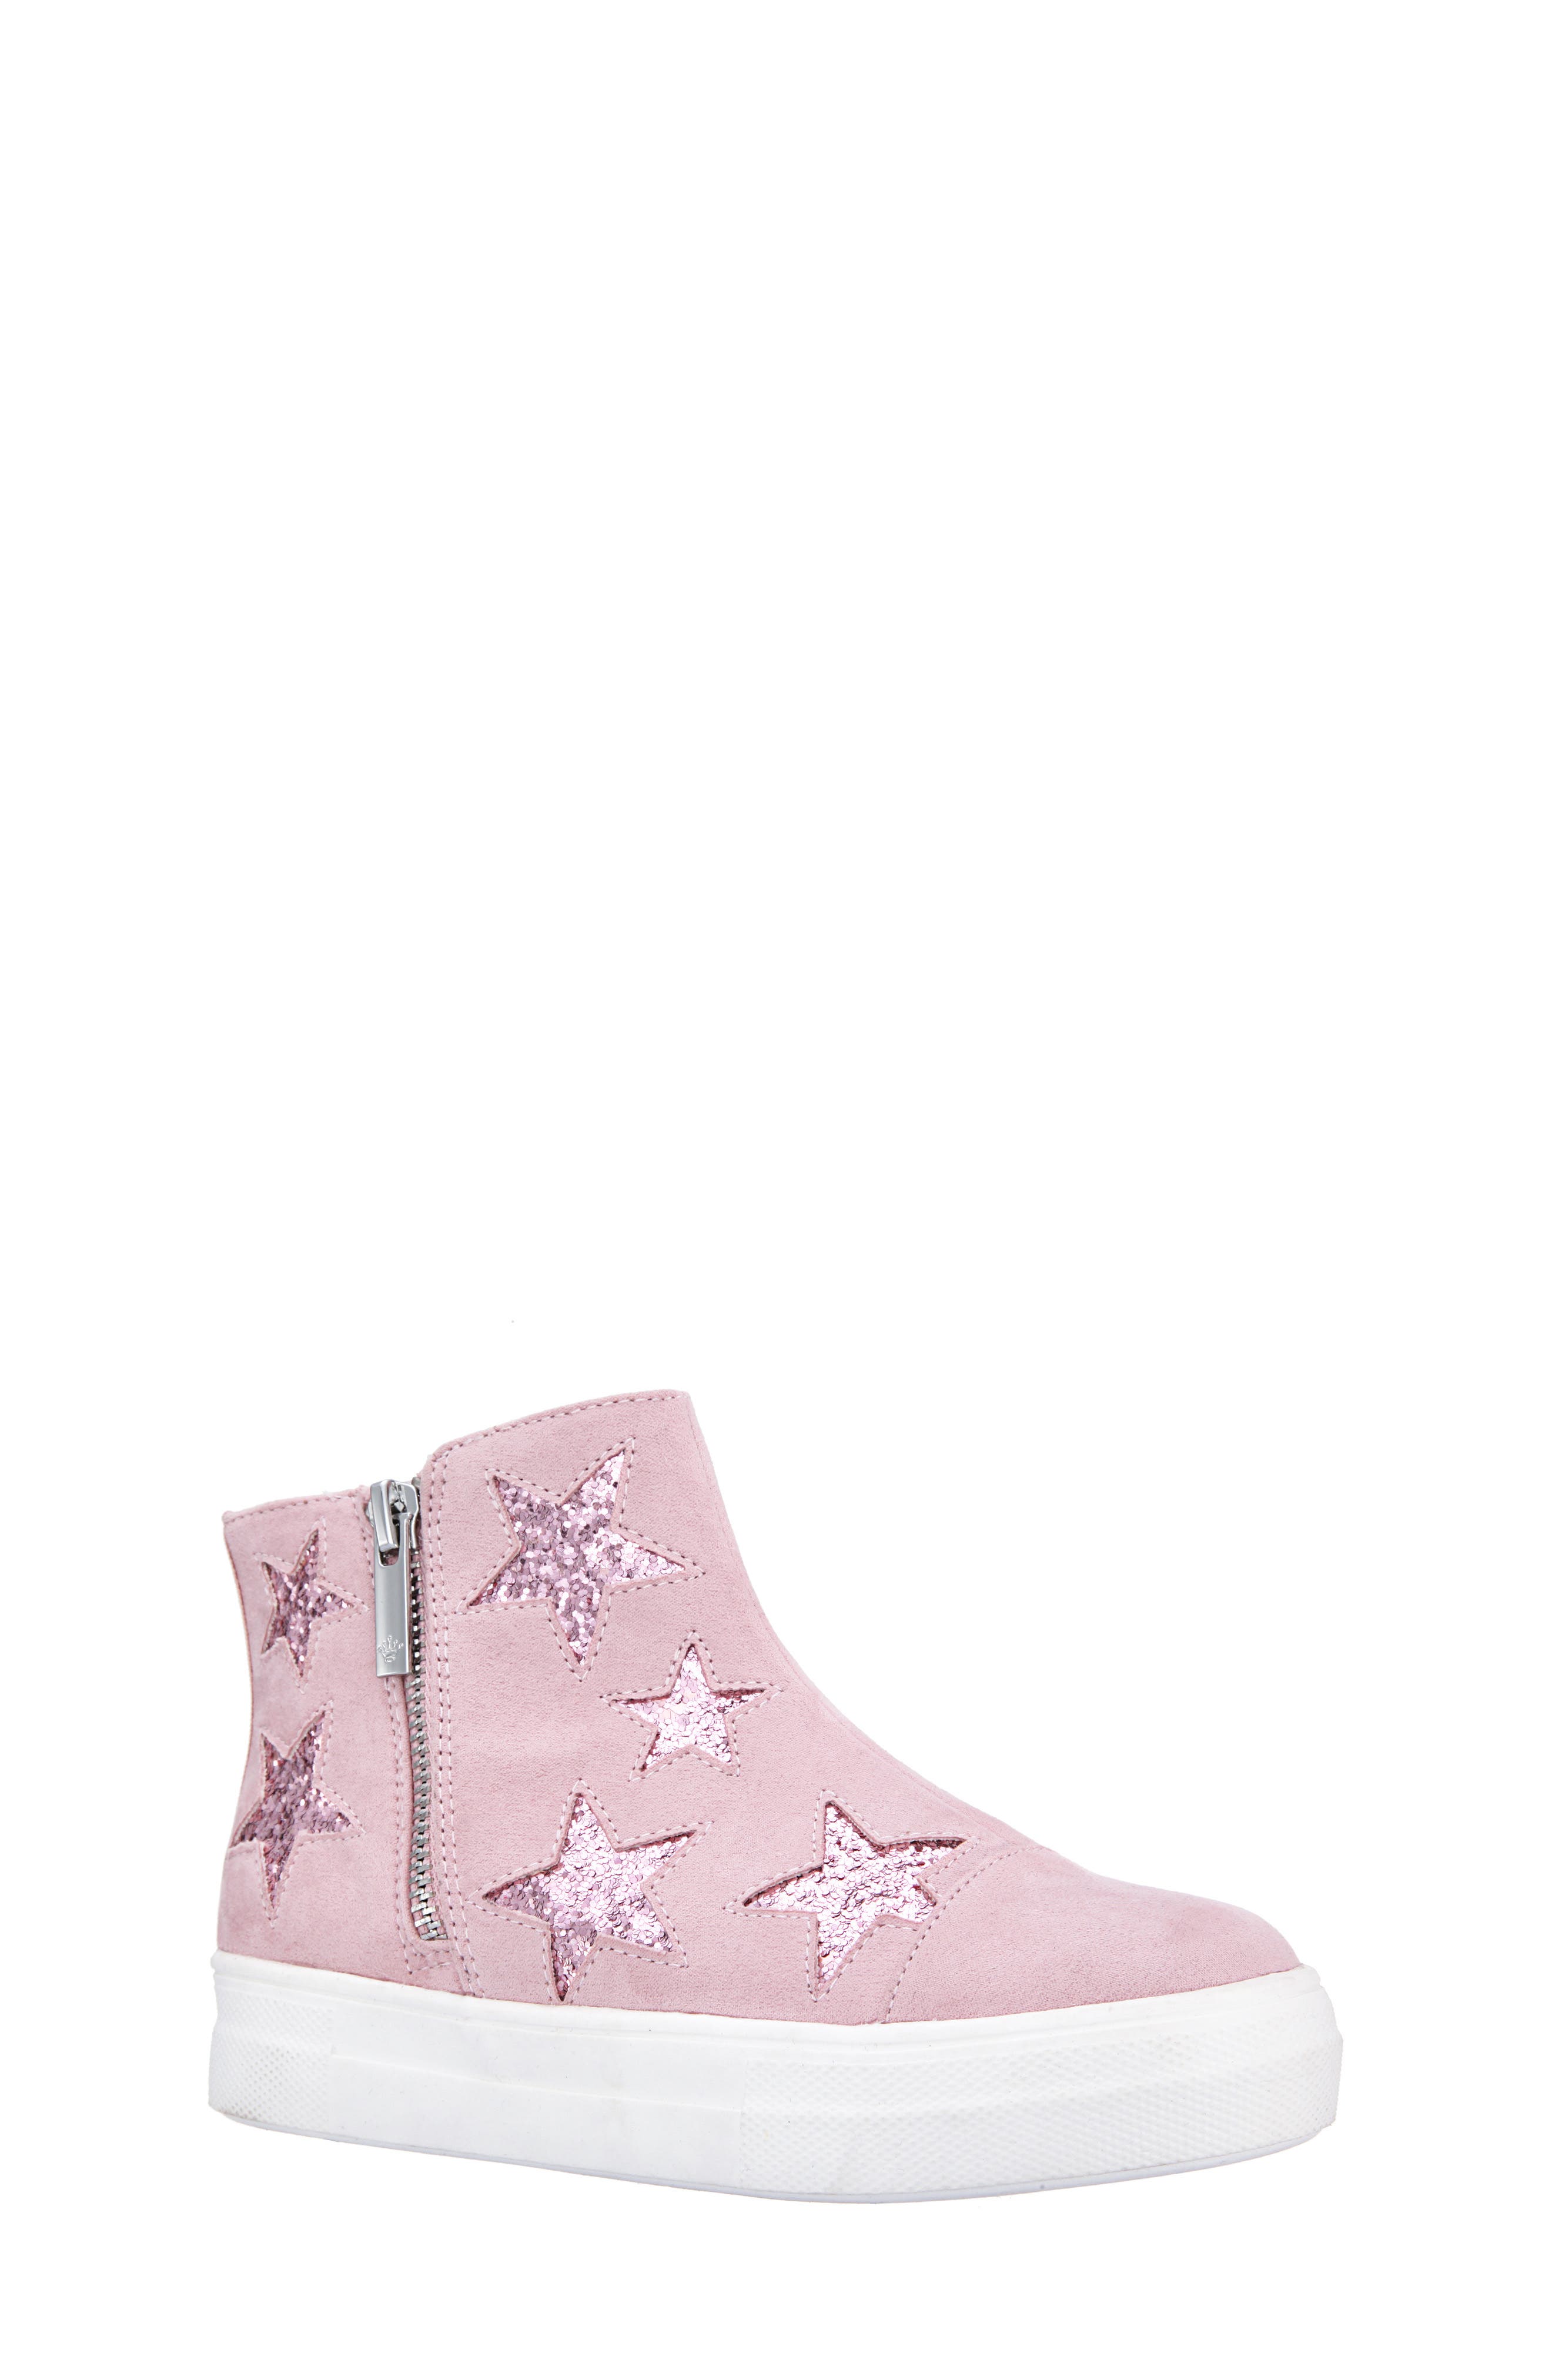 UPC 794378366461 product image for Girl's Nina Jacqui Glitter High Top Sneaker, Size 6 M - Pink | upcitemdb.com